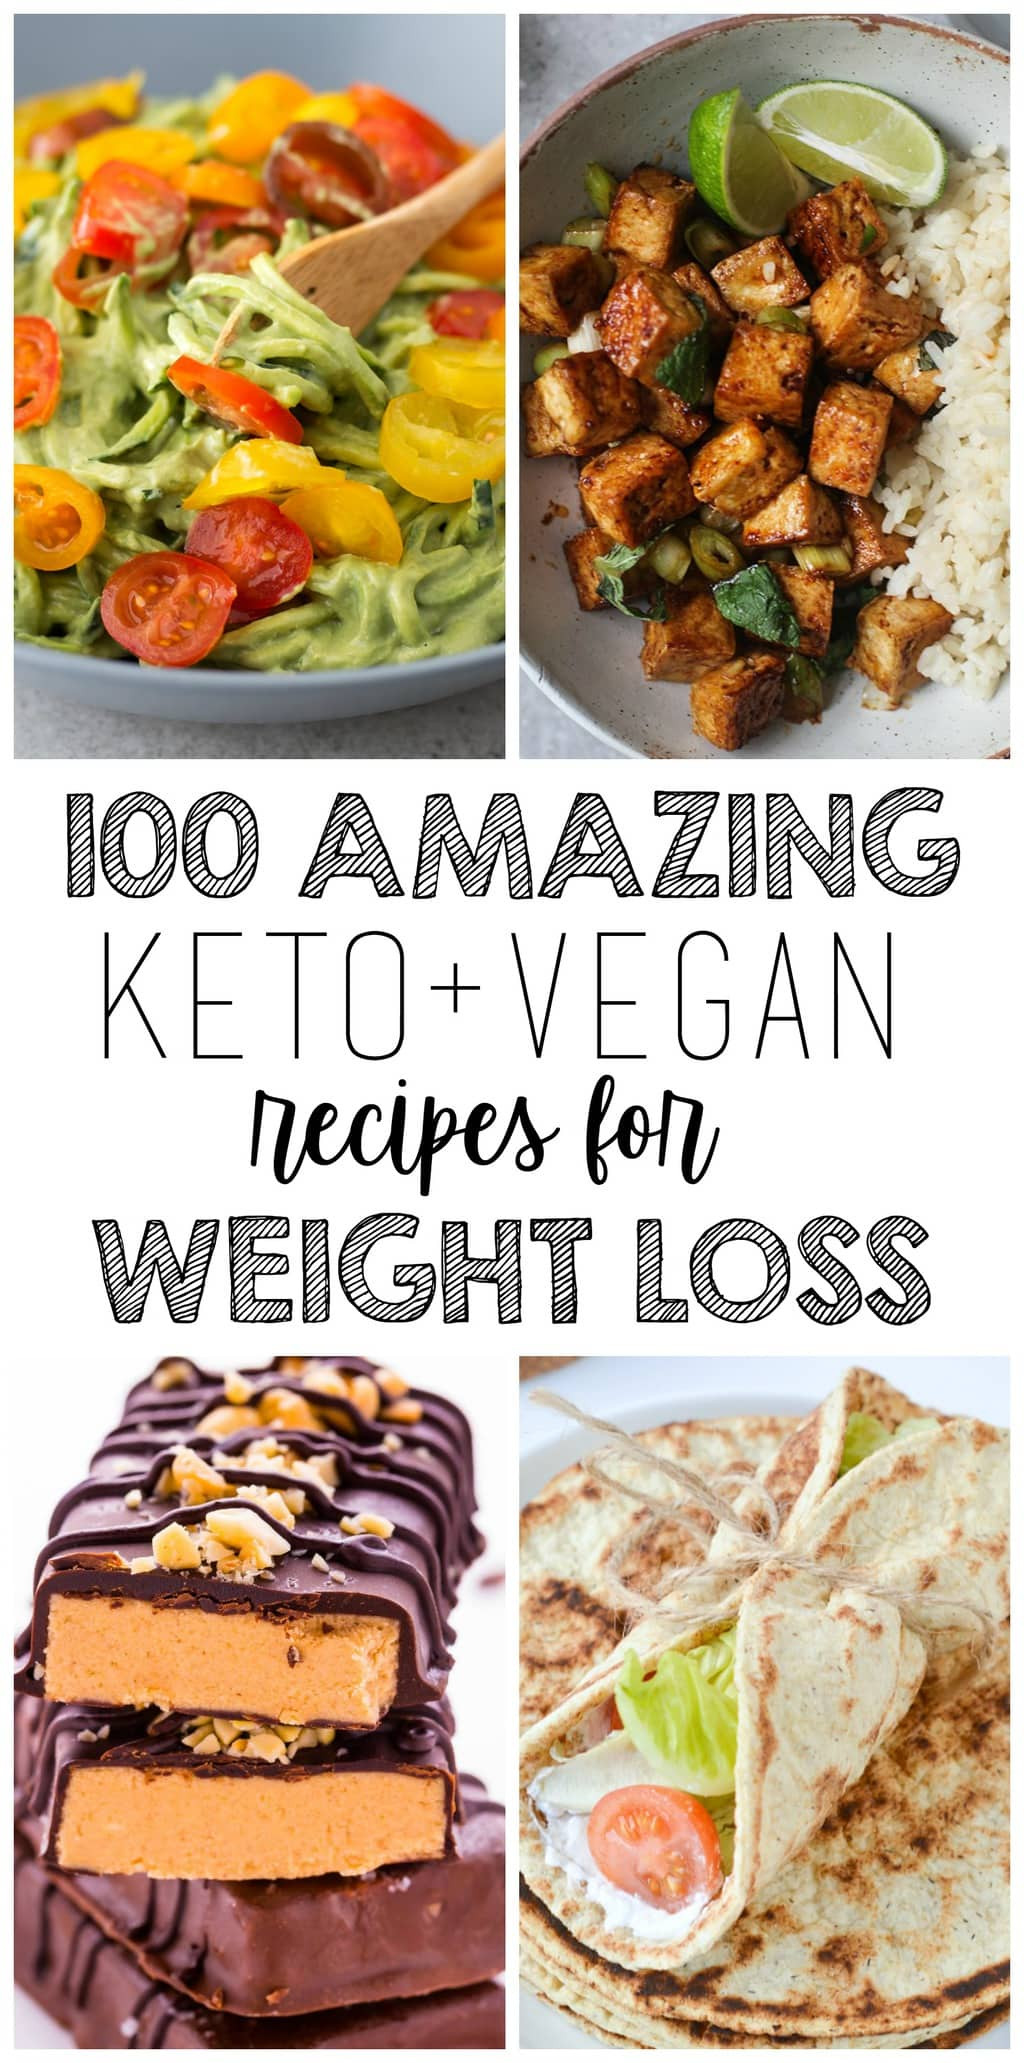 Vegetarian Keto Recipes Dairy Free
 100 AMAZING Keto Vegan Recipes For Weight Loss